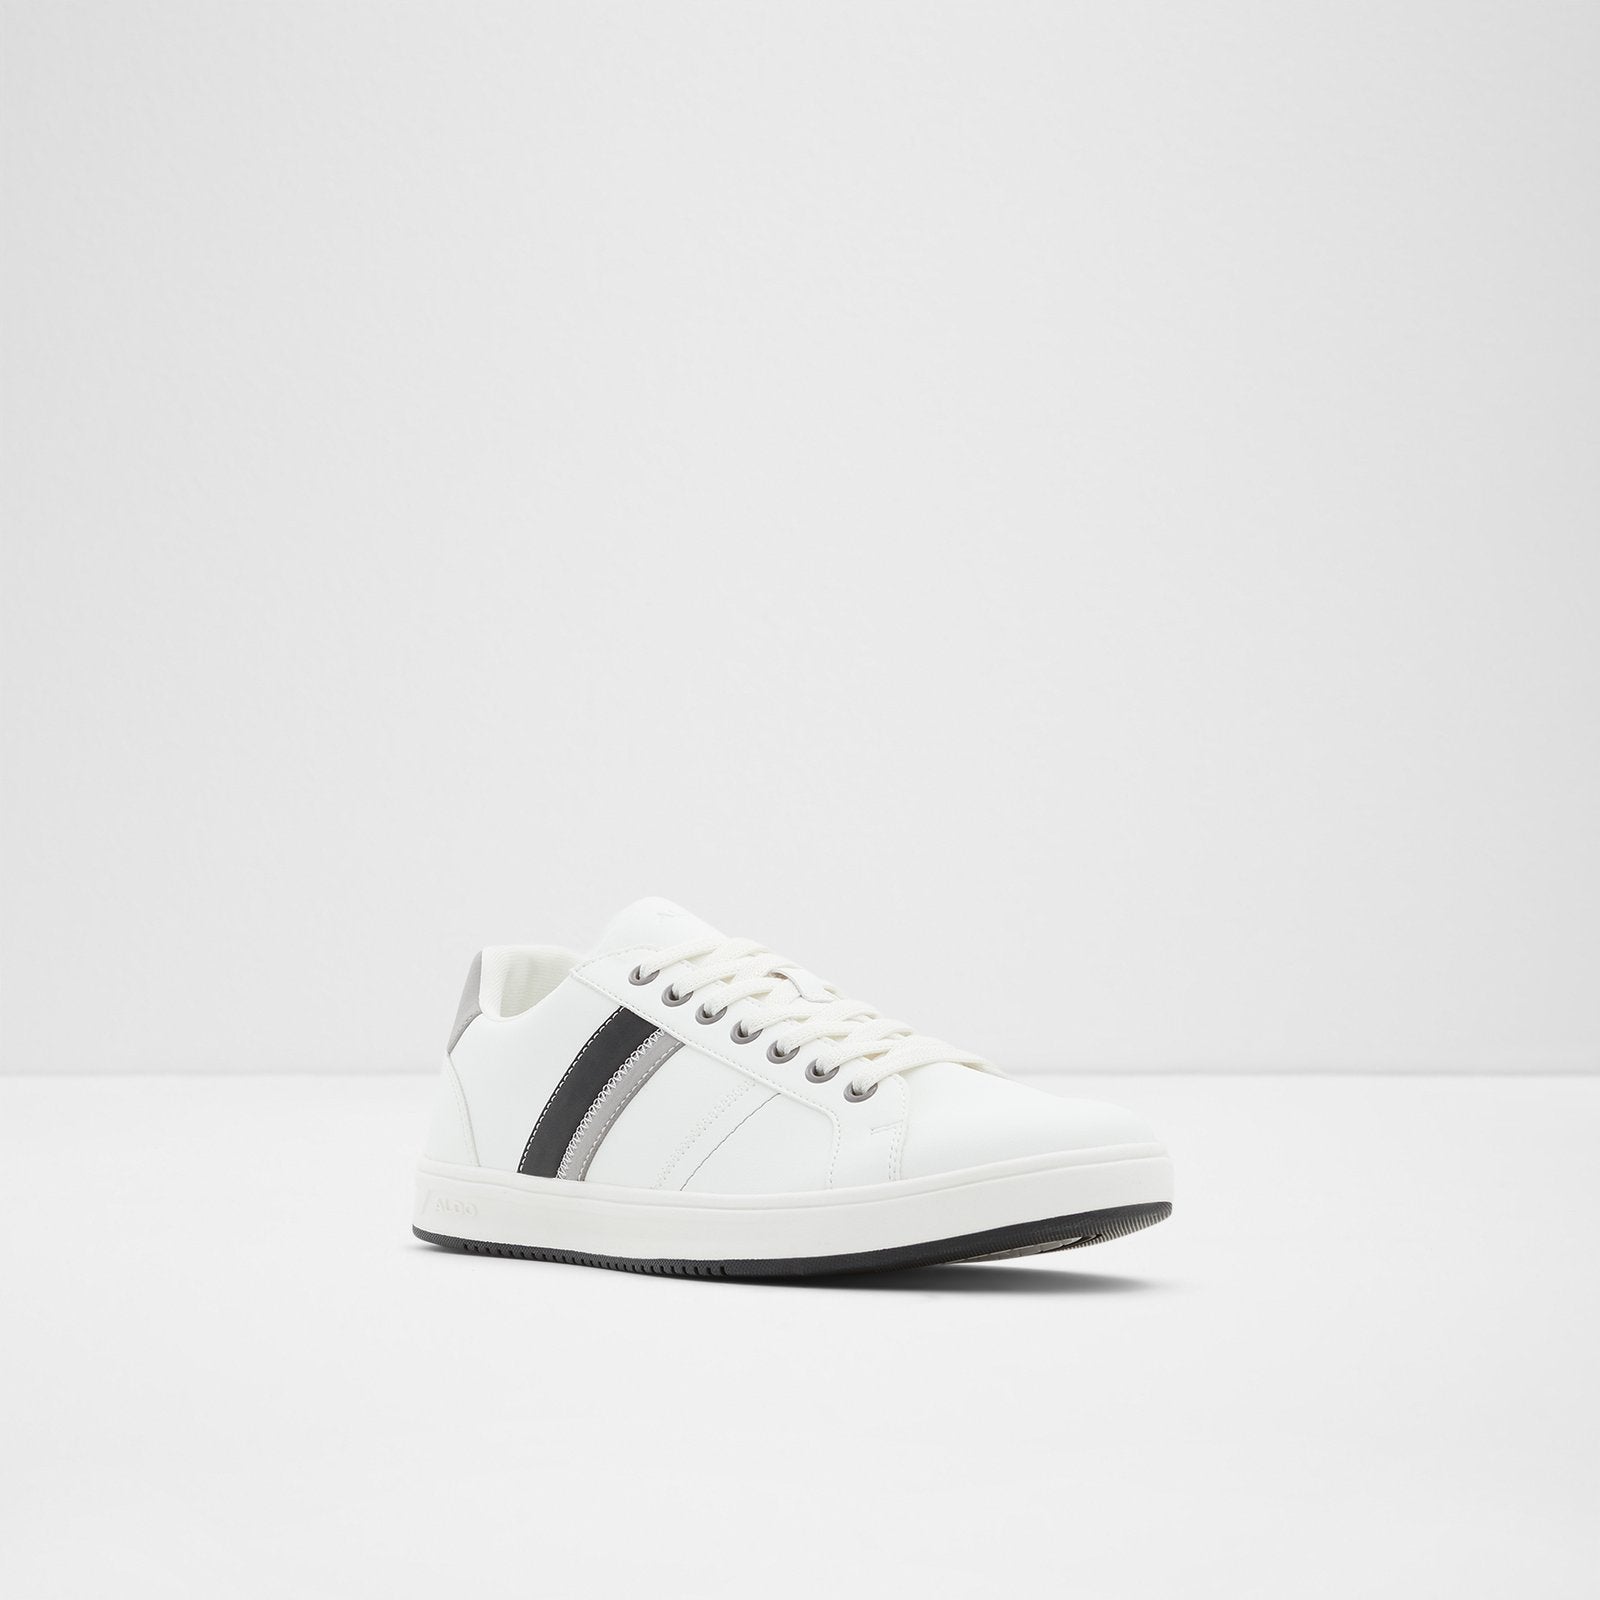 Citywalk Men Shoes - White - ALDO KSA